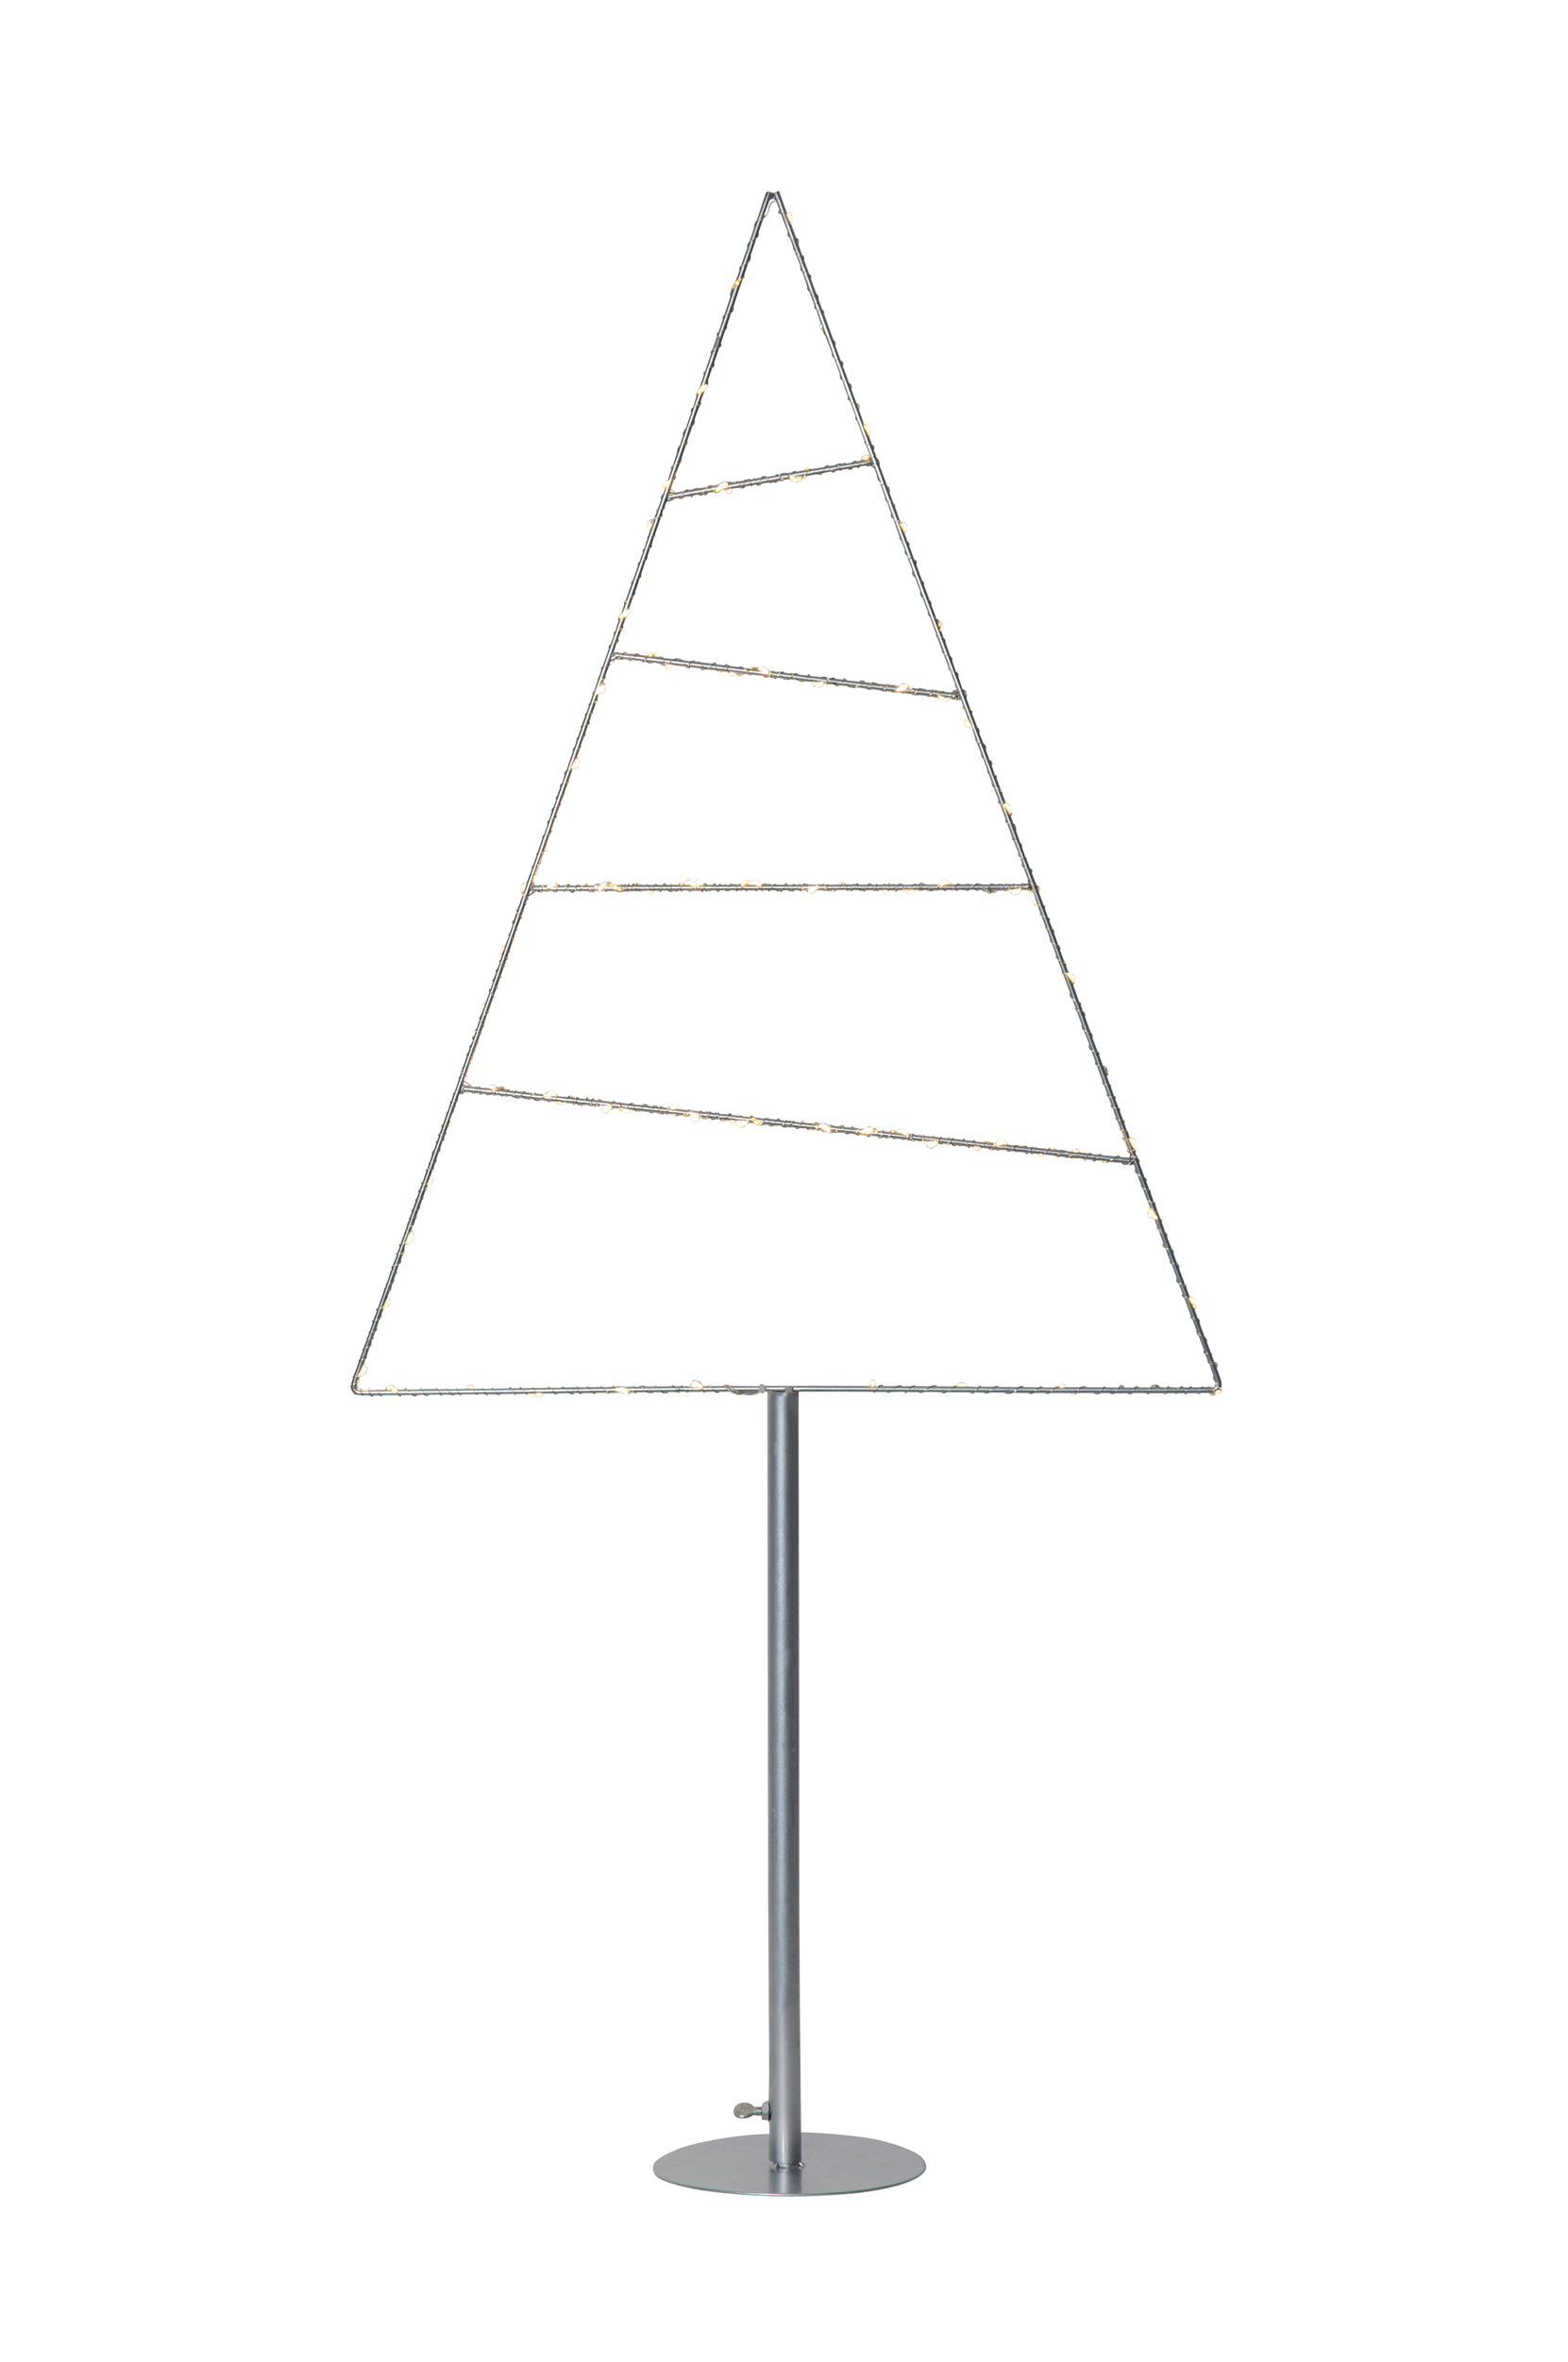 Star Trading - TRIANGLE dekorationsträd LED - stor - Silver